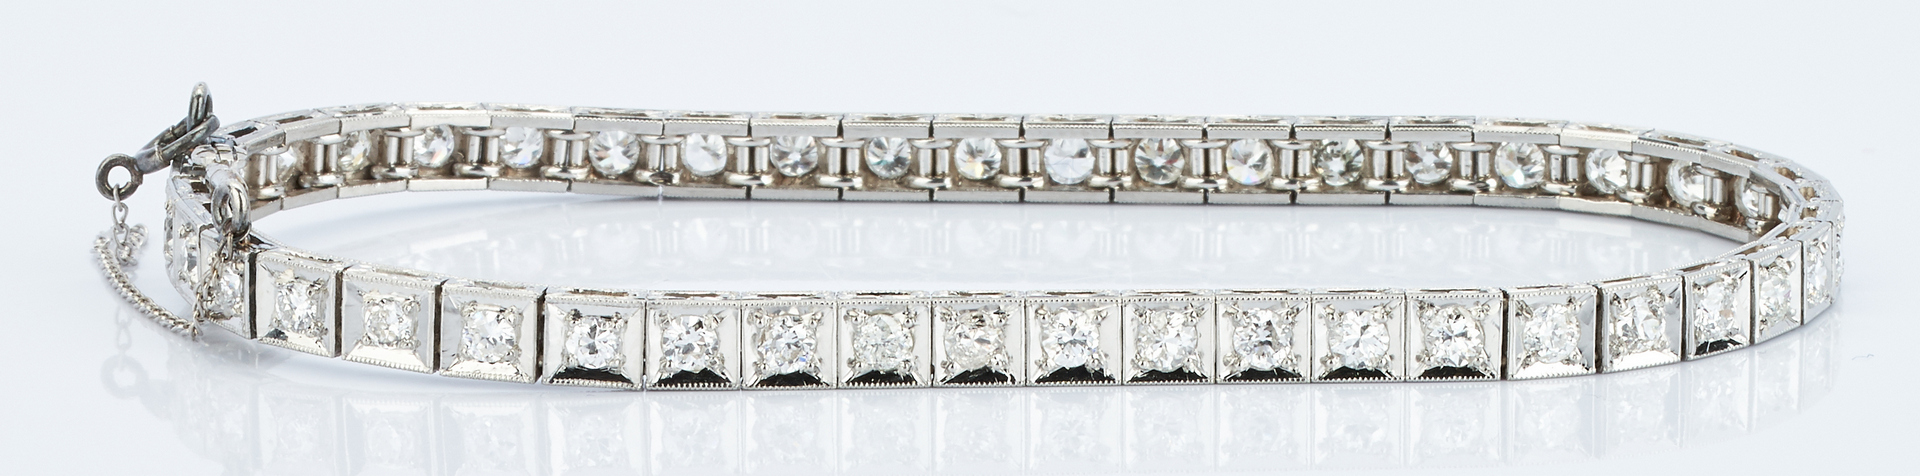 Lot 409: Ladies Platinum & Diamond Line Bracelet